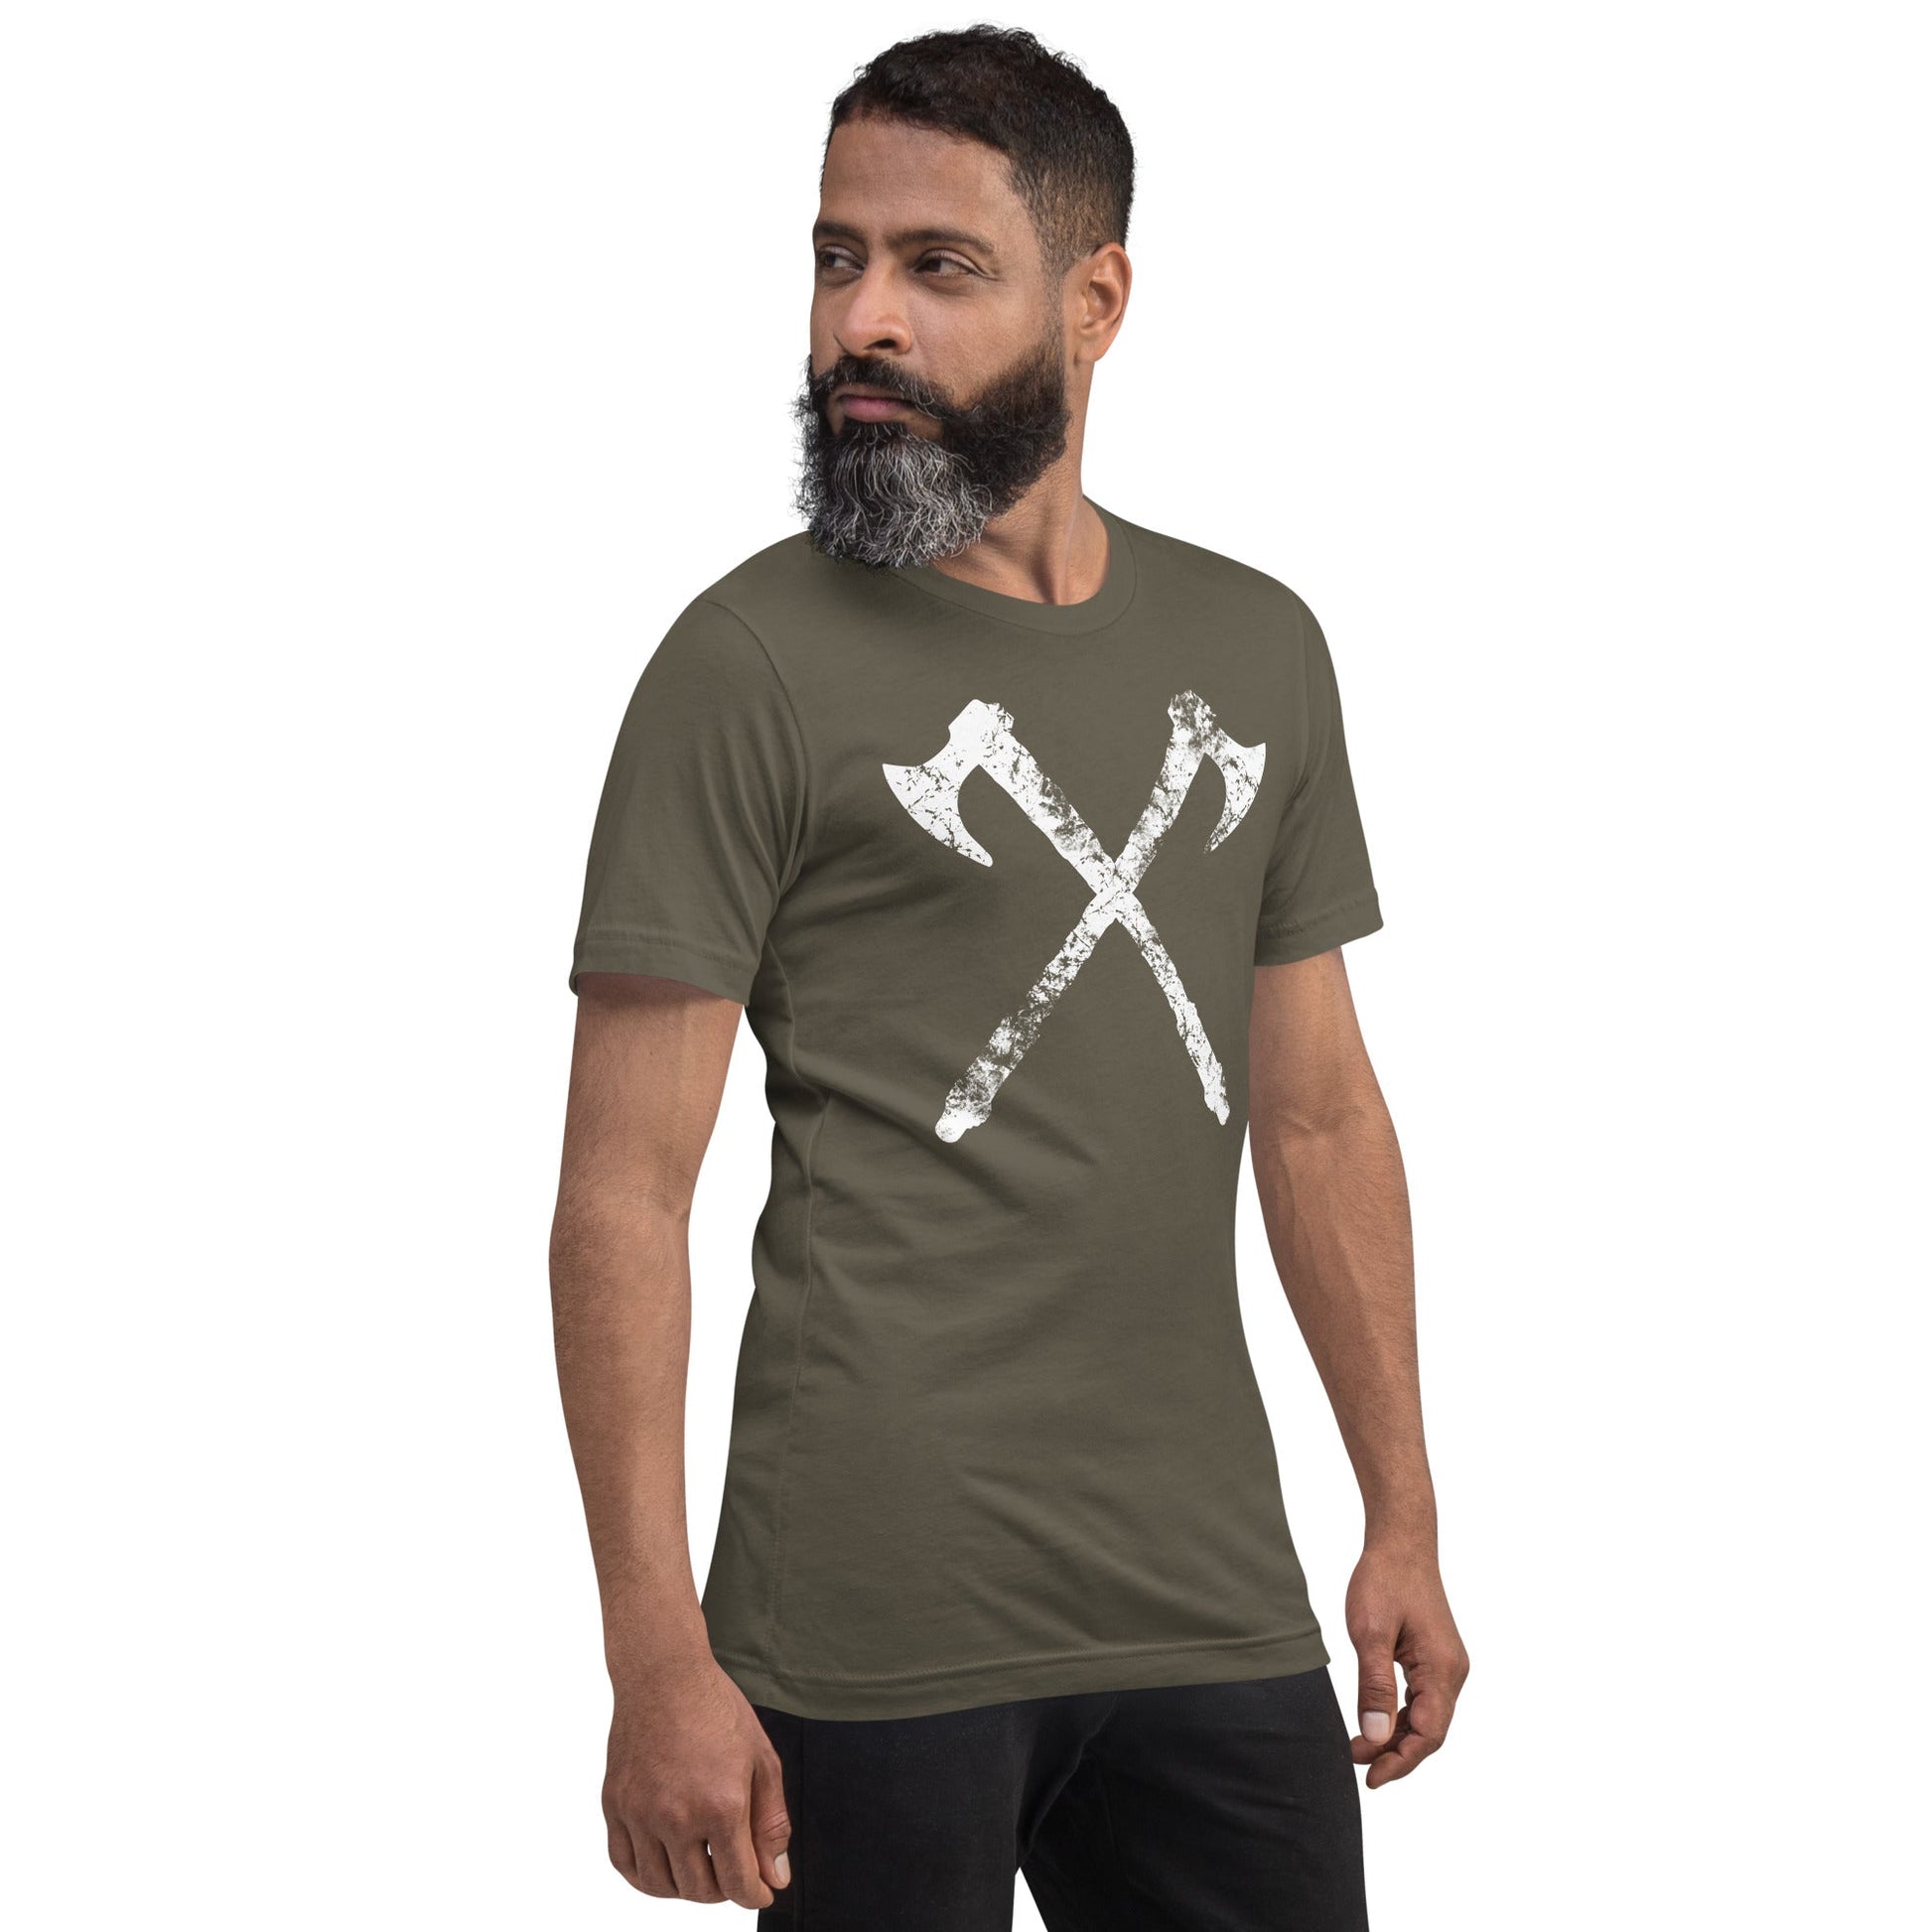 Scar Design Vintage Viking Axes T-shirt